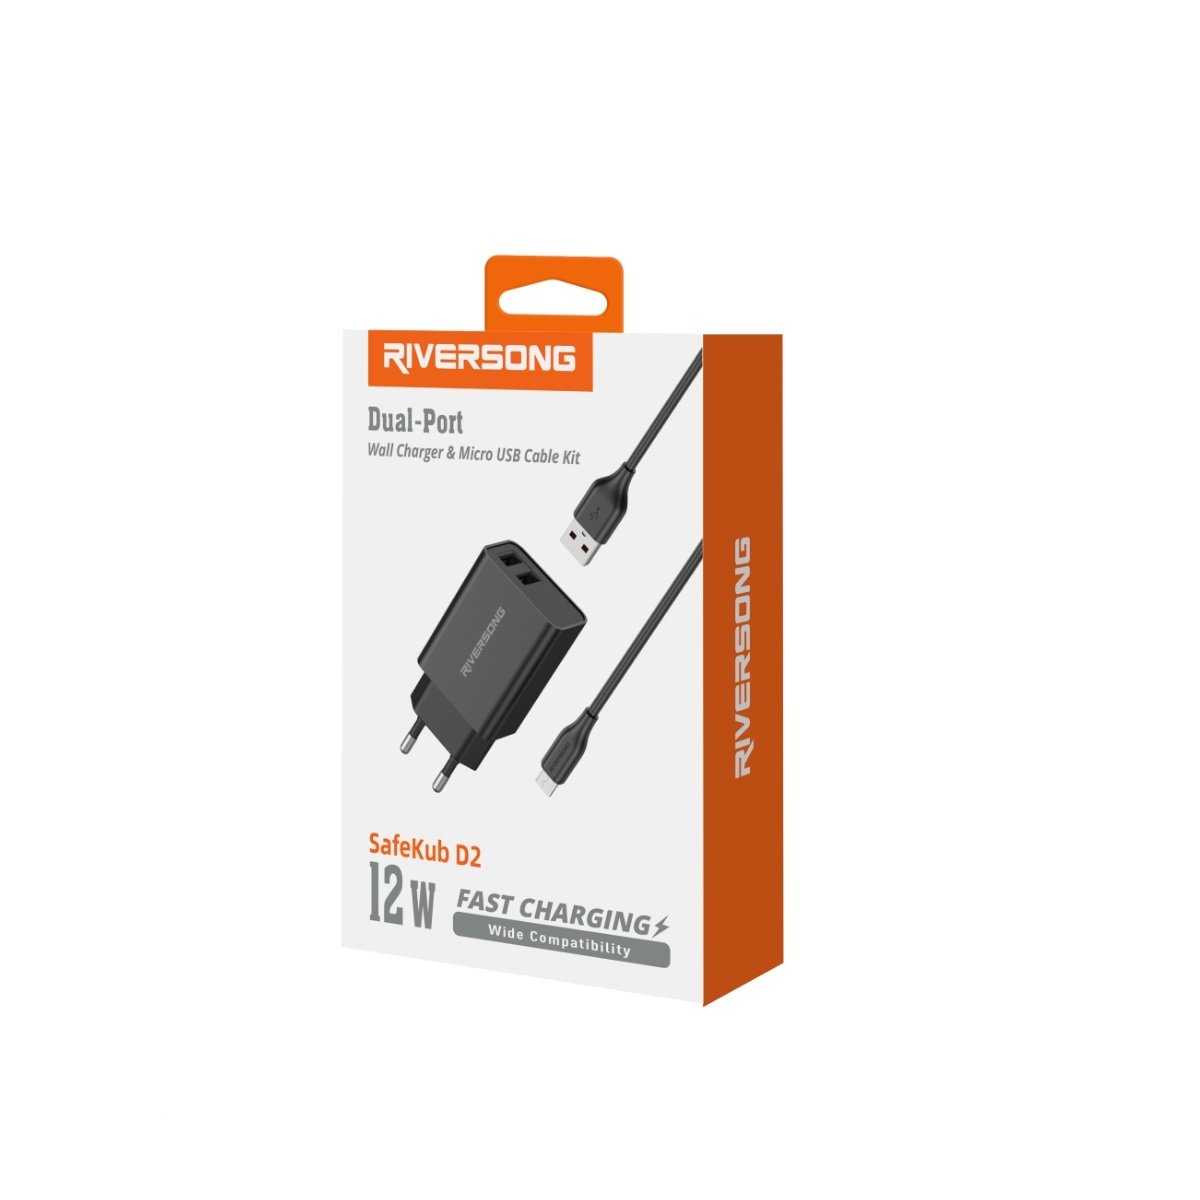 Riversong adowarka sieciowa SafeKub D2 2x USB 12W czarna + kabel USB - microUSB AD29 + CM85 / 2